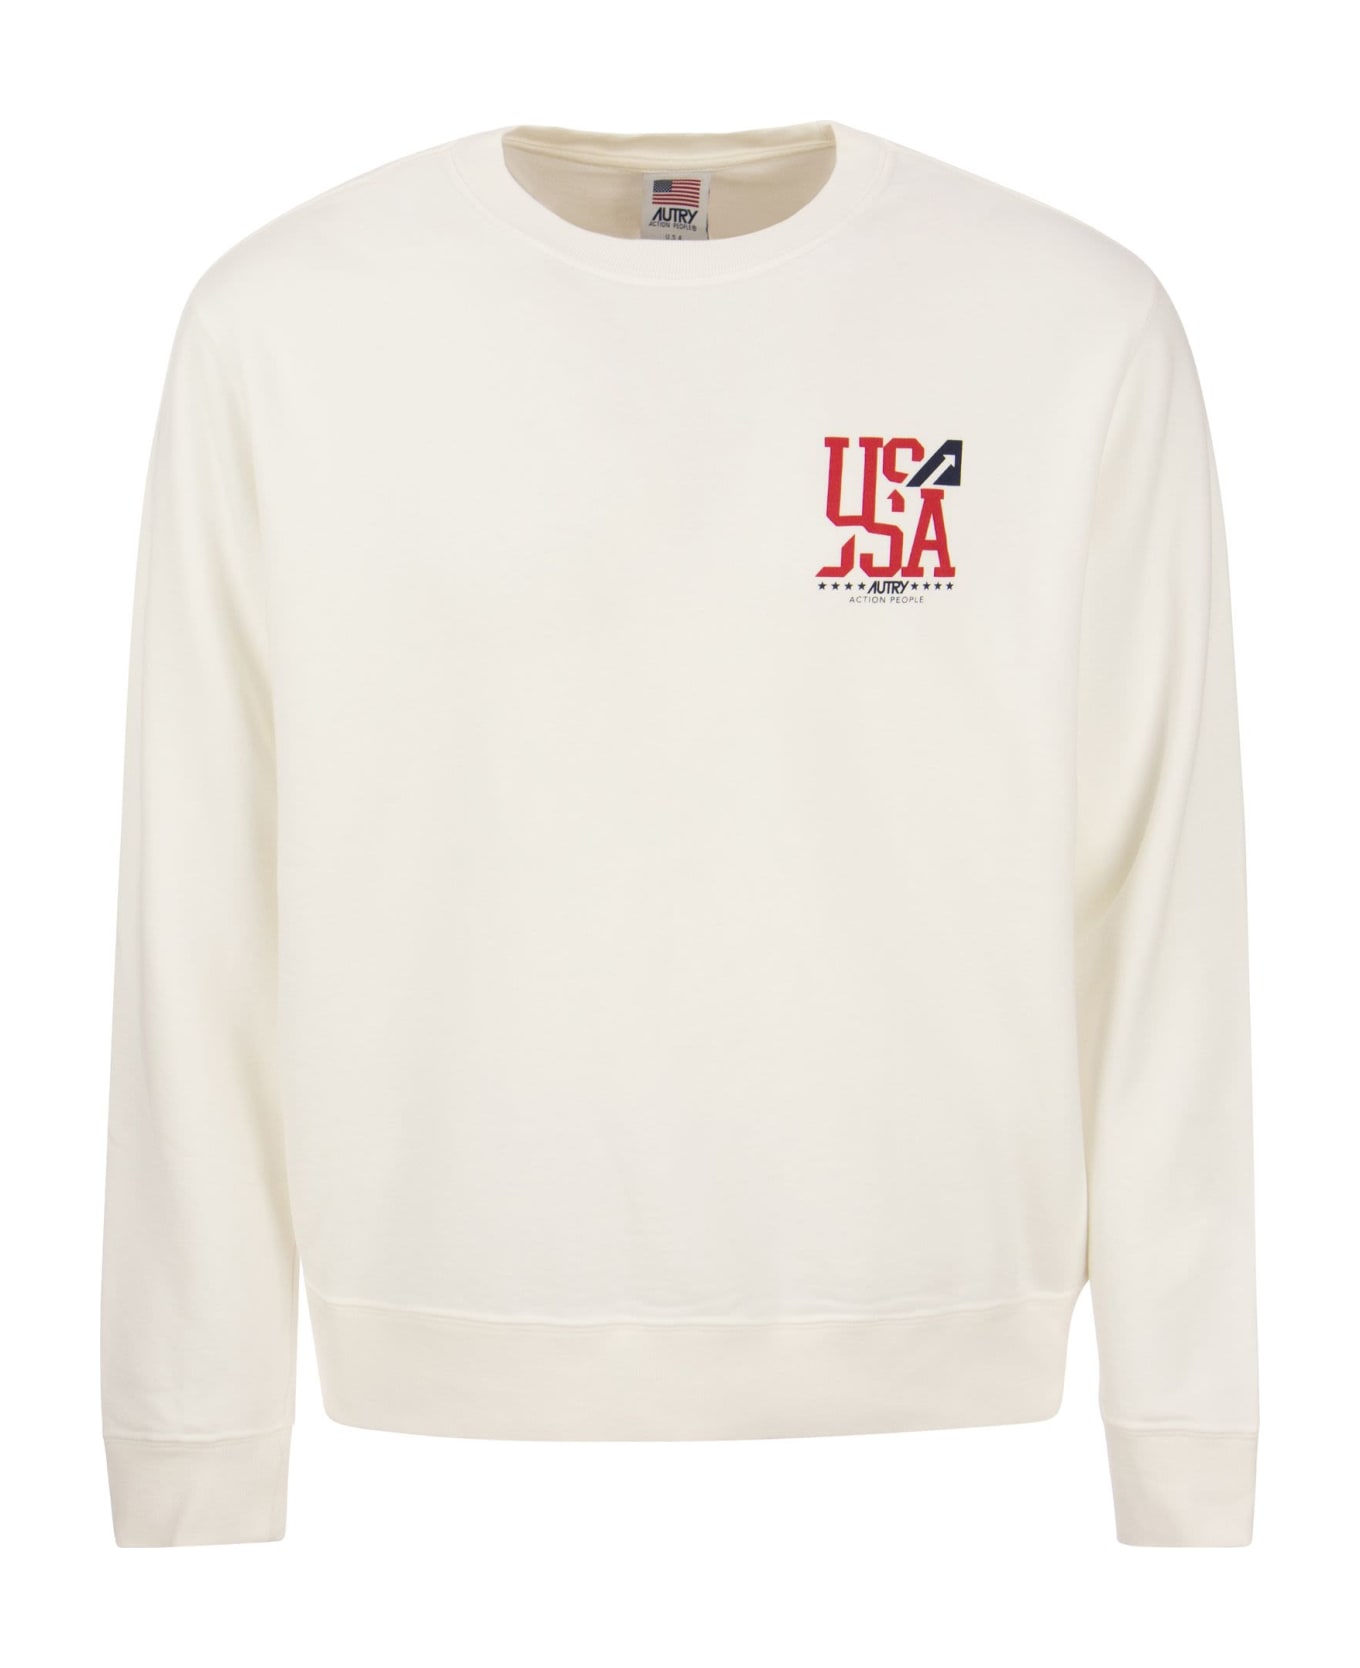 Autry Iconic Action Sweatshirt - White フリース